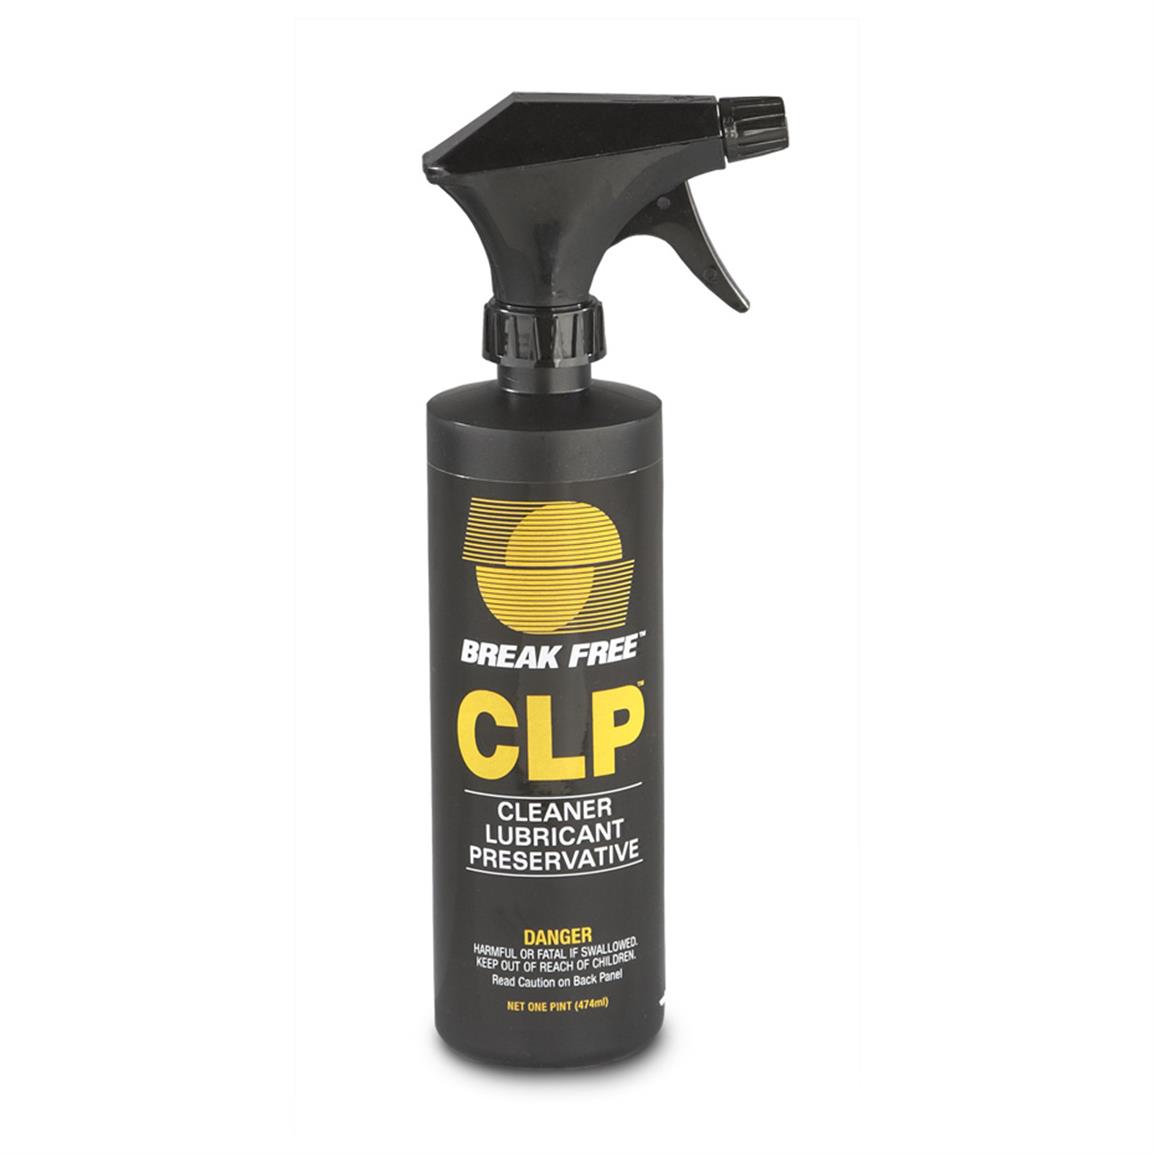 Break-Free CLP 16-oz. Gun Cleaner/ Lubricant/Preservative ...
